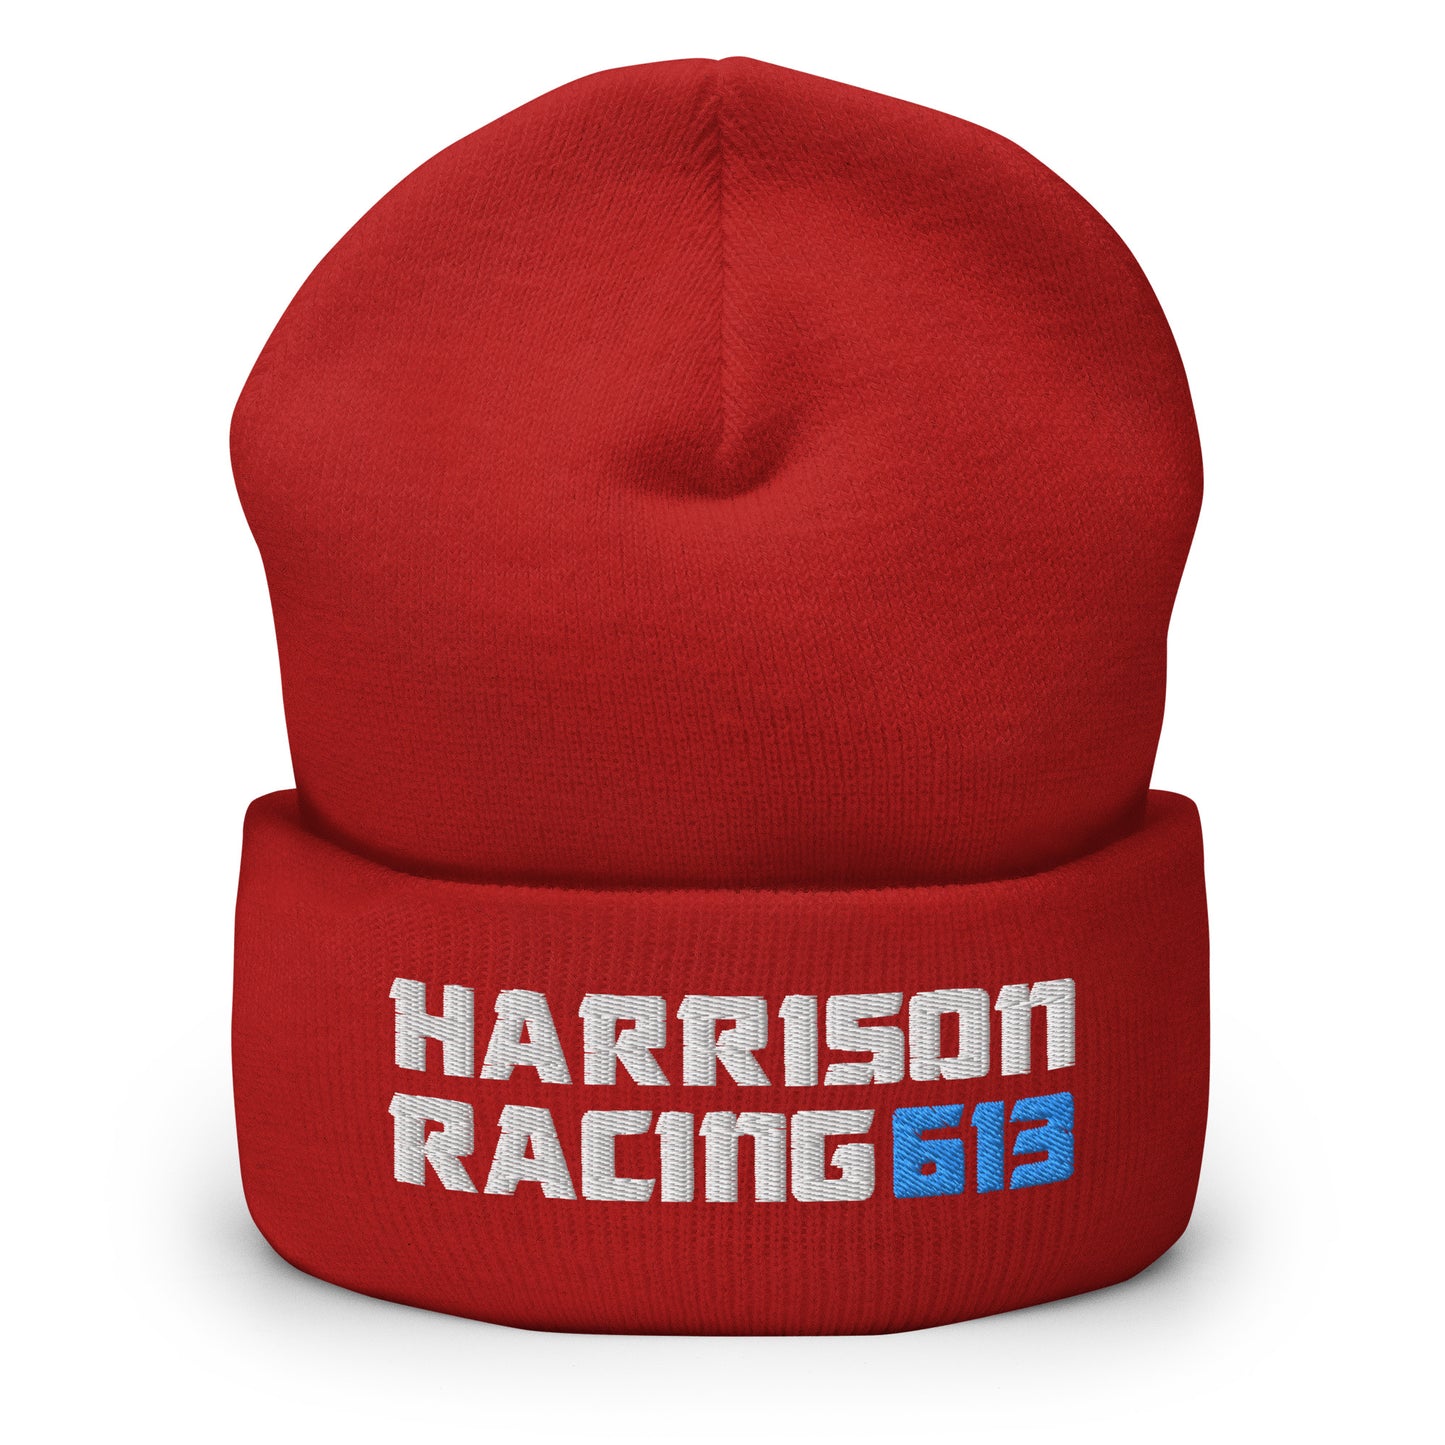 Harrison Racing 613 Beanie